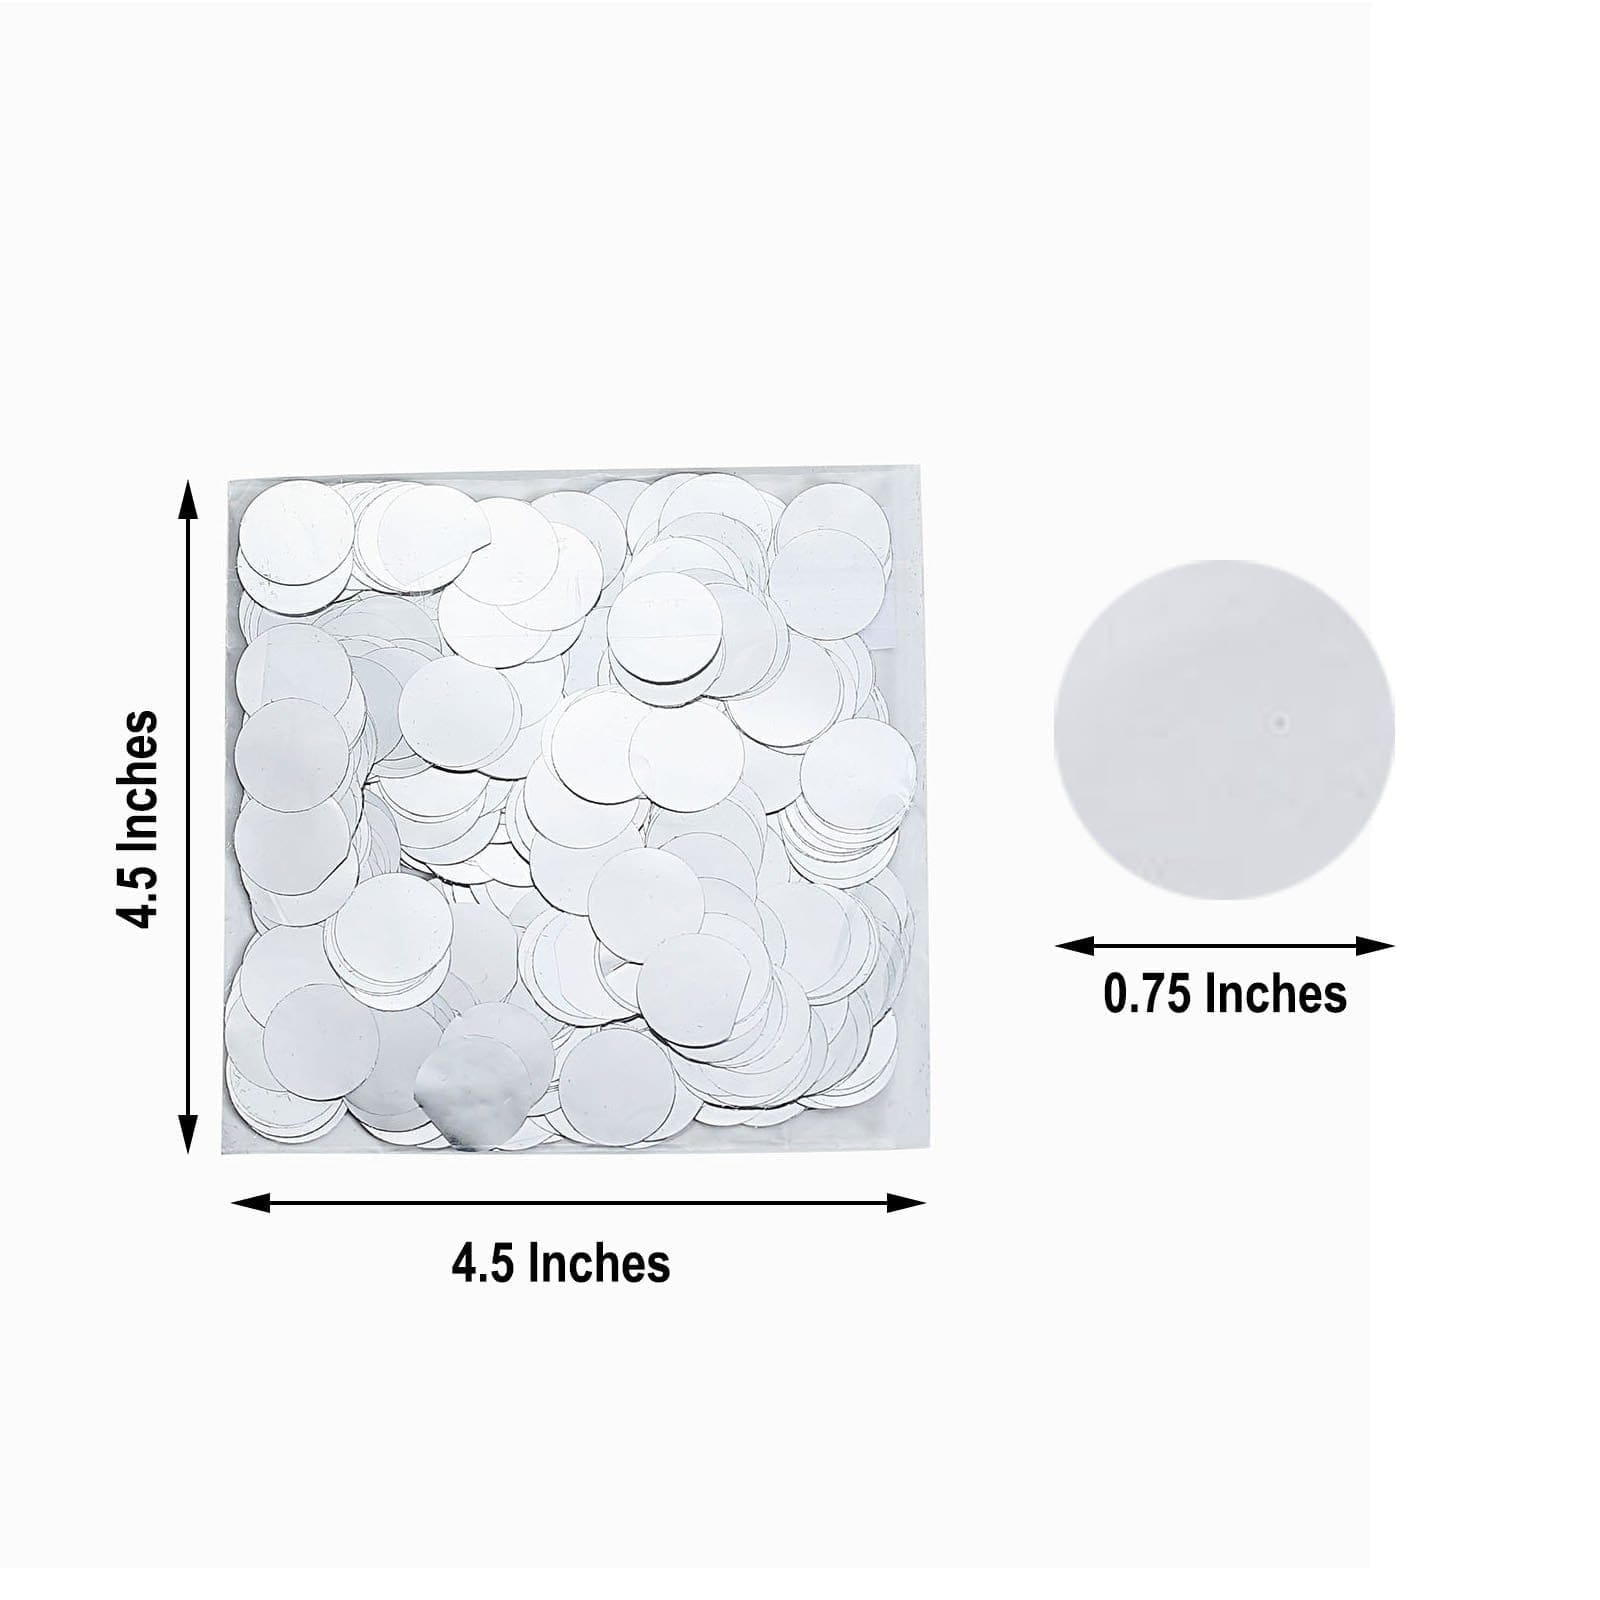 18 grams Metallic Round Dots Balloons Confetti